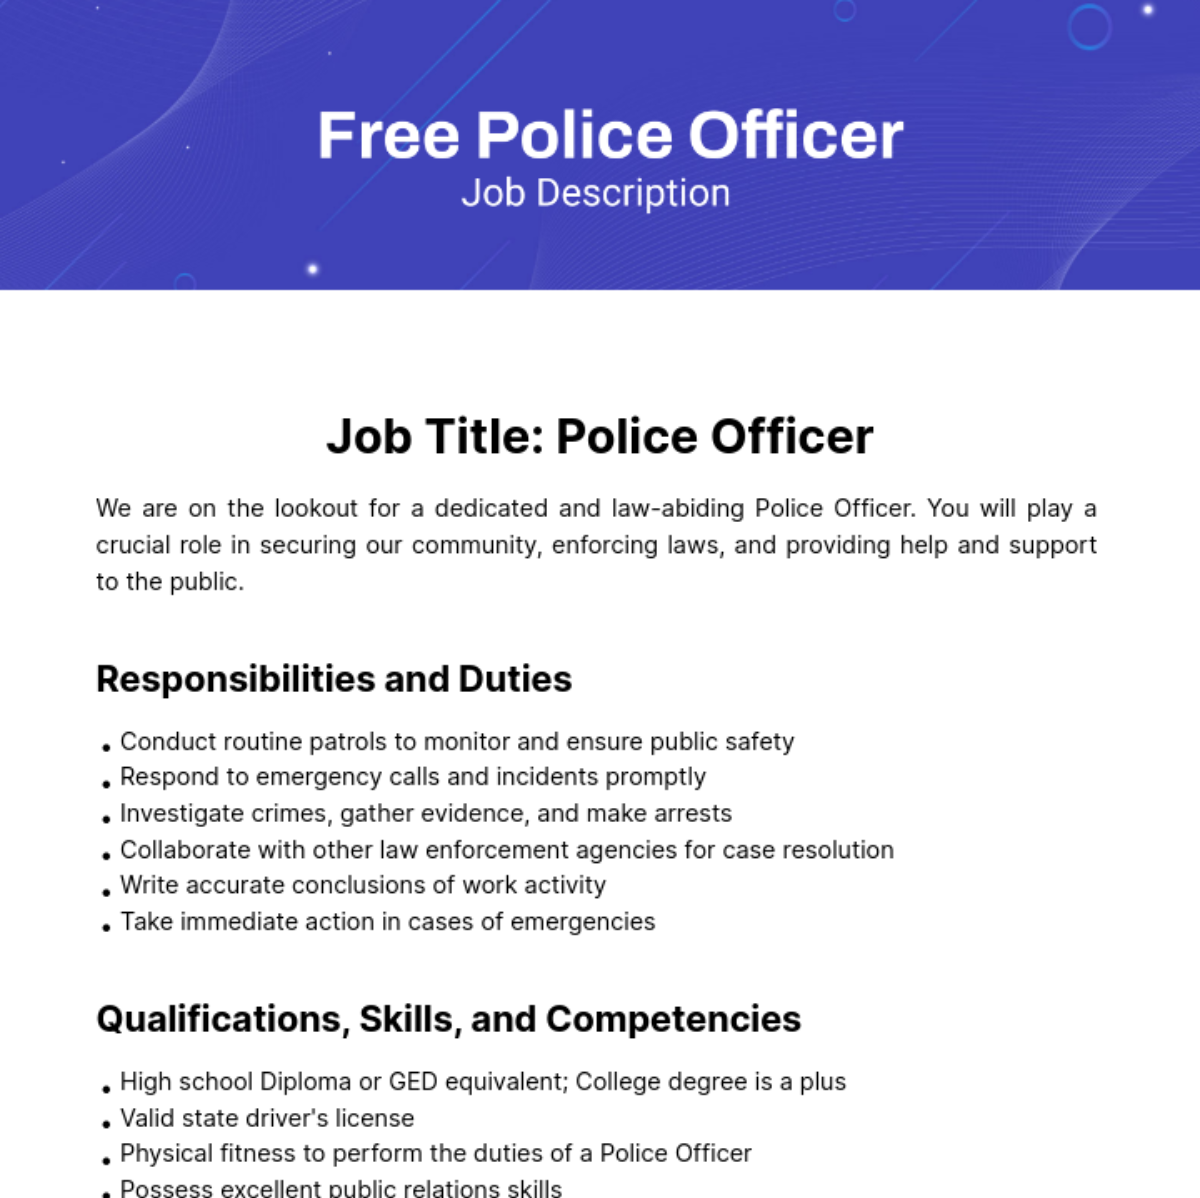 Free Police Officer Job Description Template